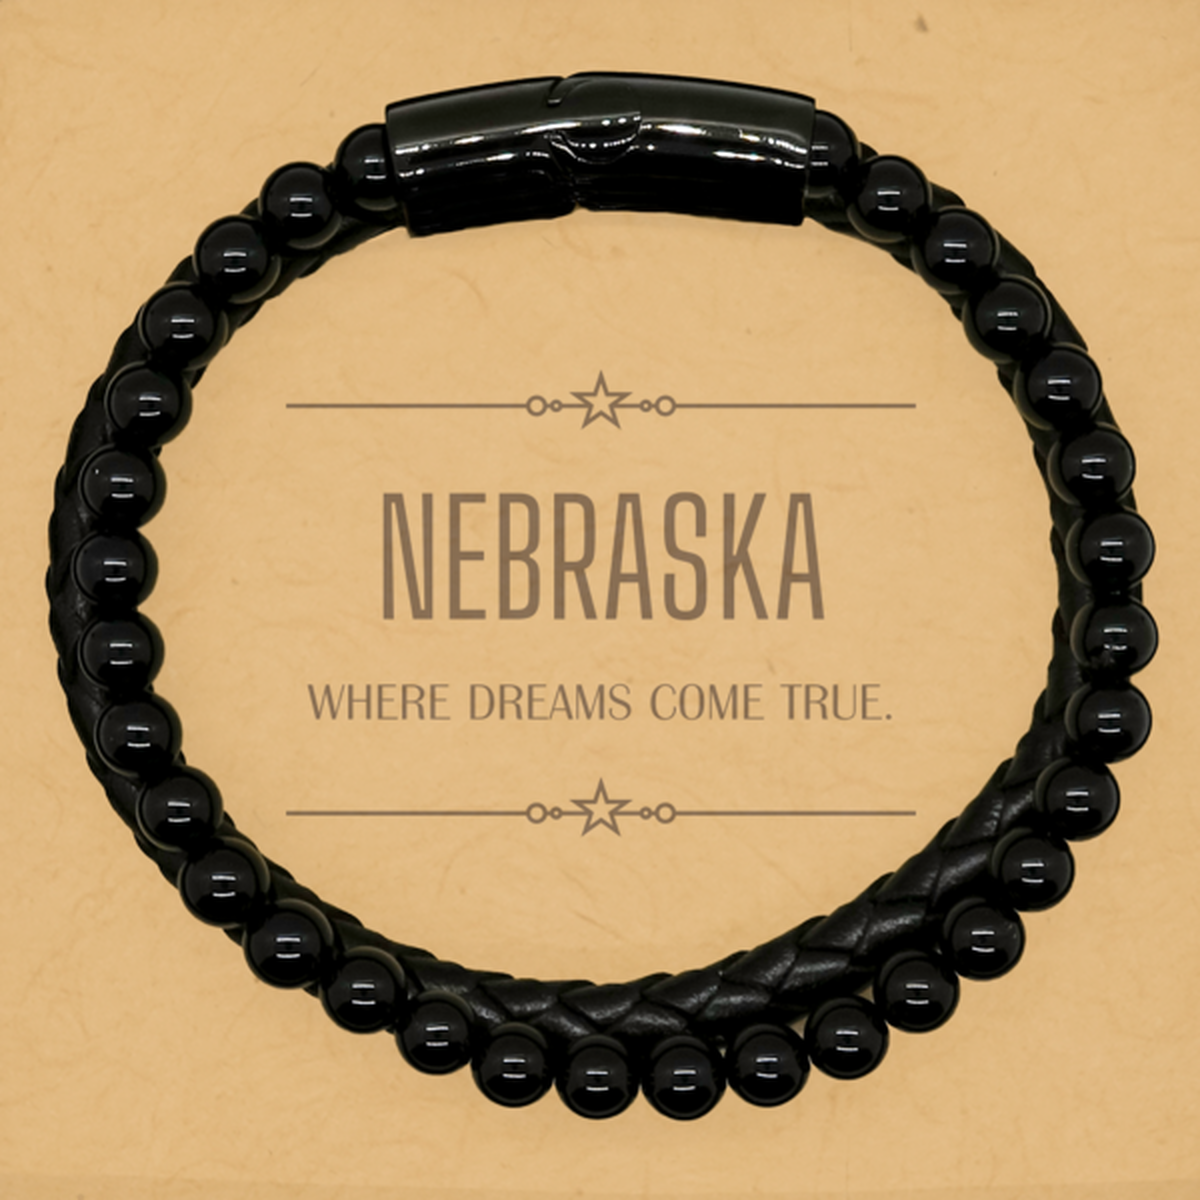 Love Nebraska State Stone Leather Bracelets, Nebraska Where dreams come true, Birthday Inspirational Gifts For Nebraska Men, Women, Friends